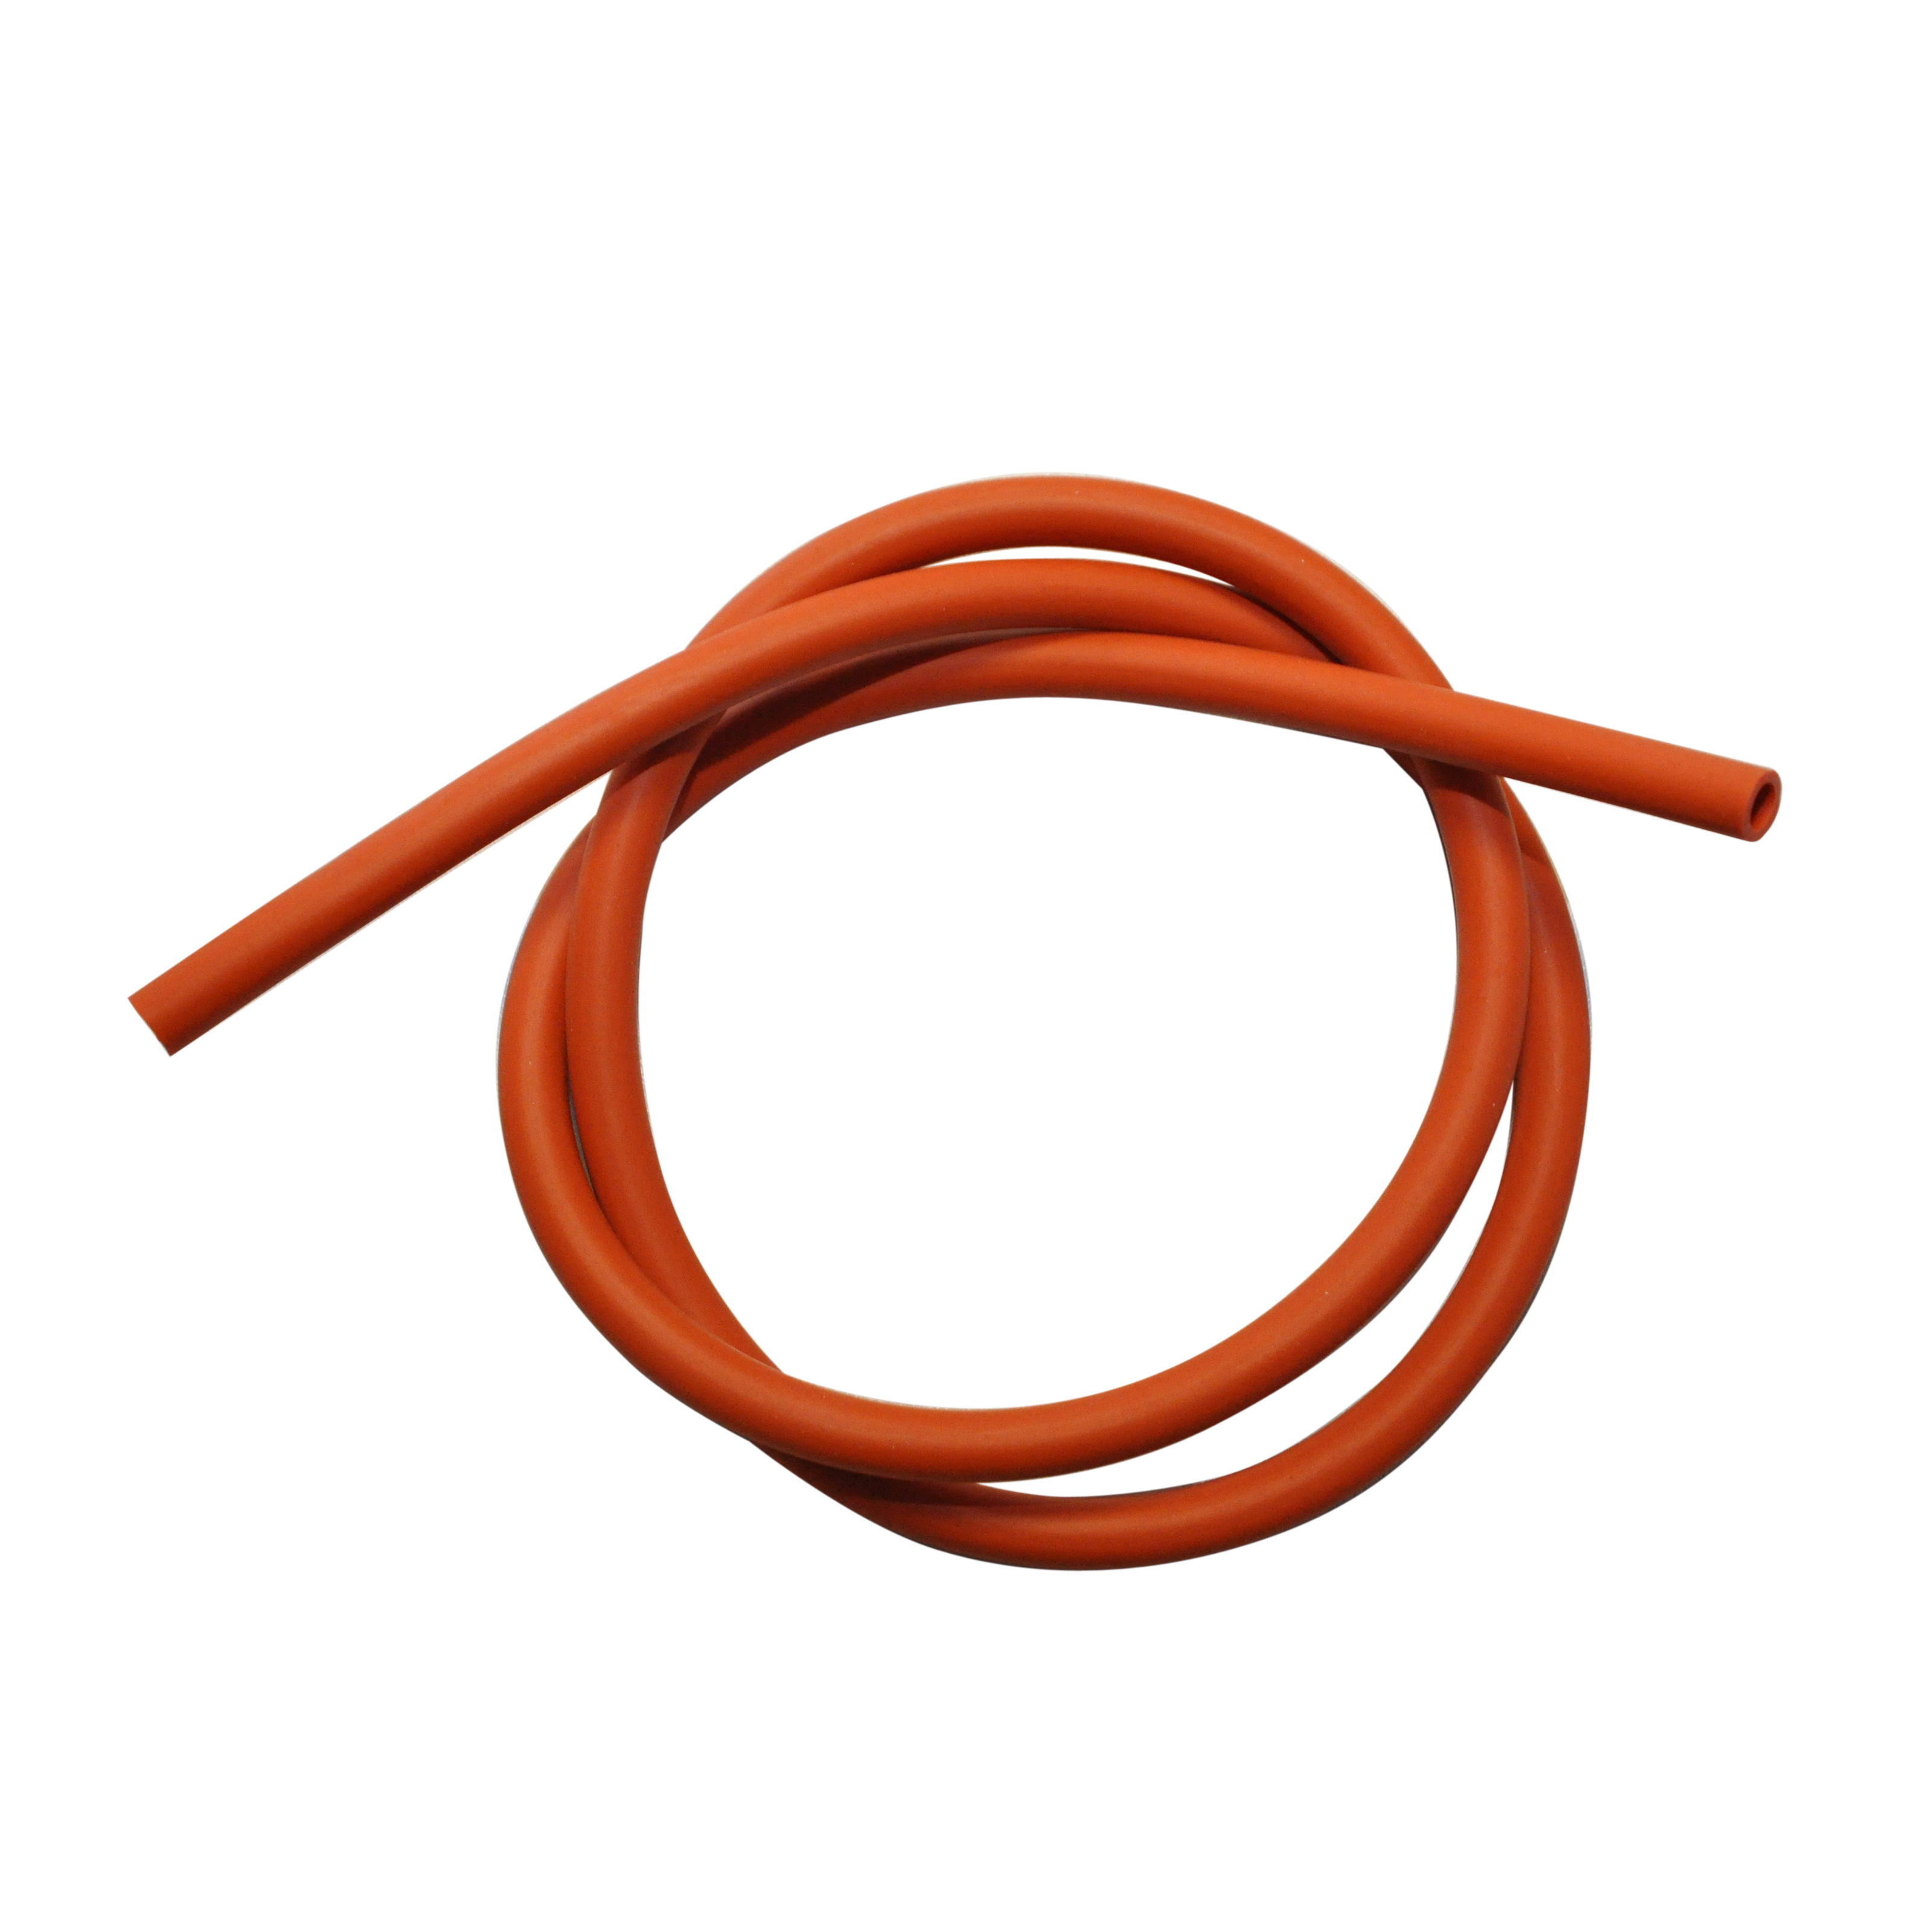 Rubber hose 8 x 2 mm, orange